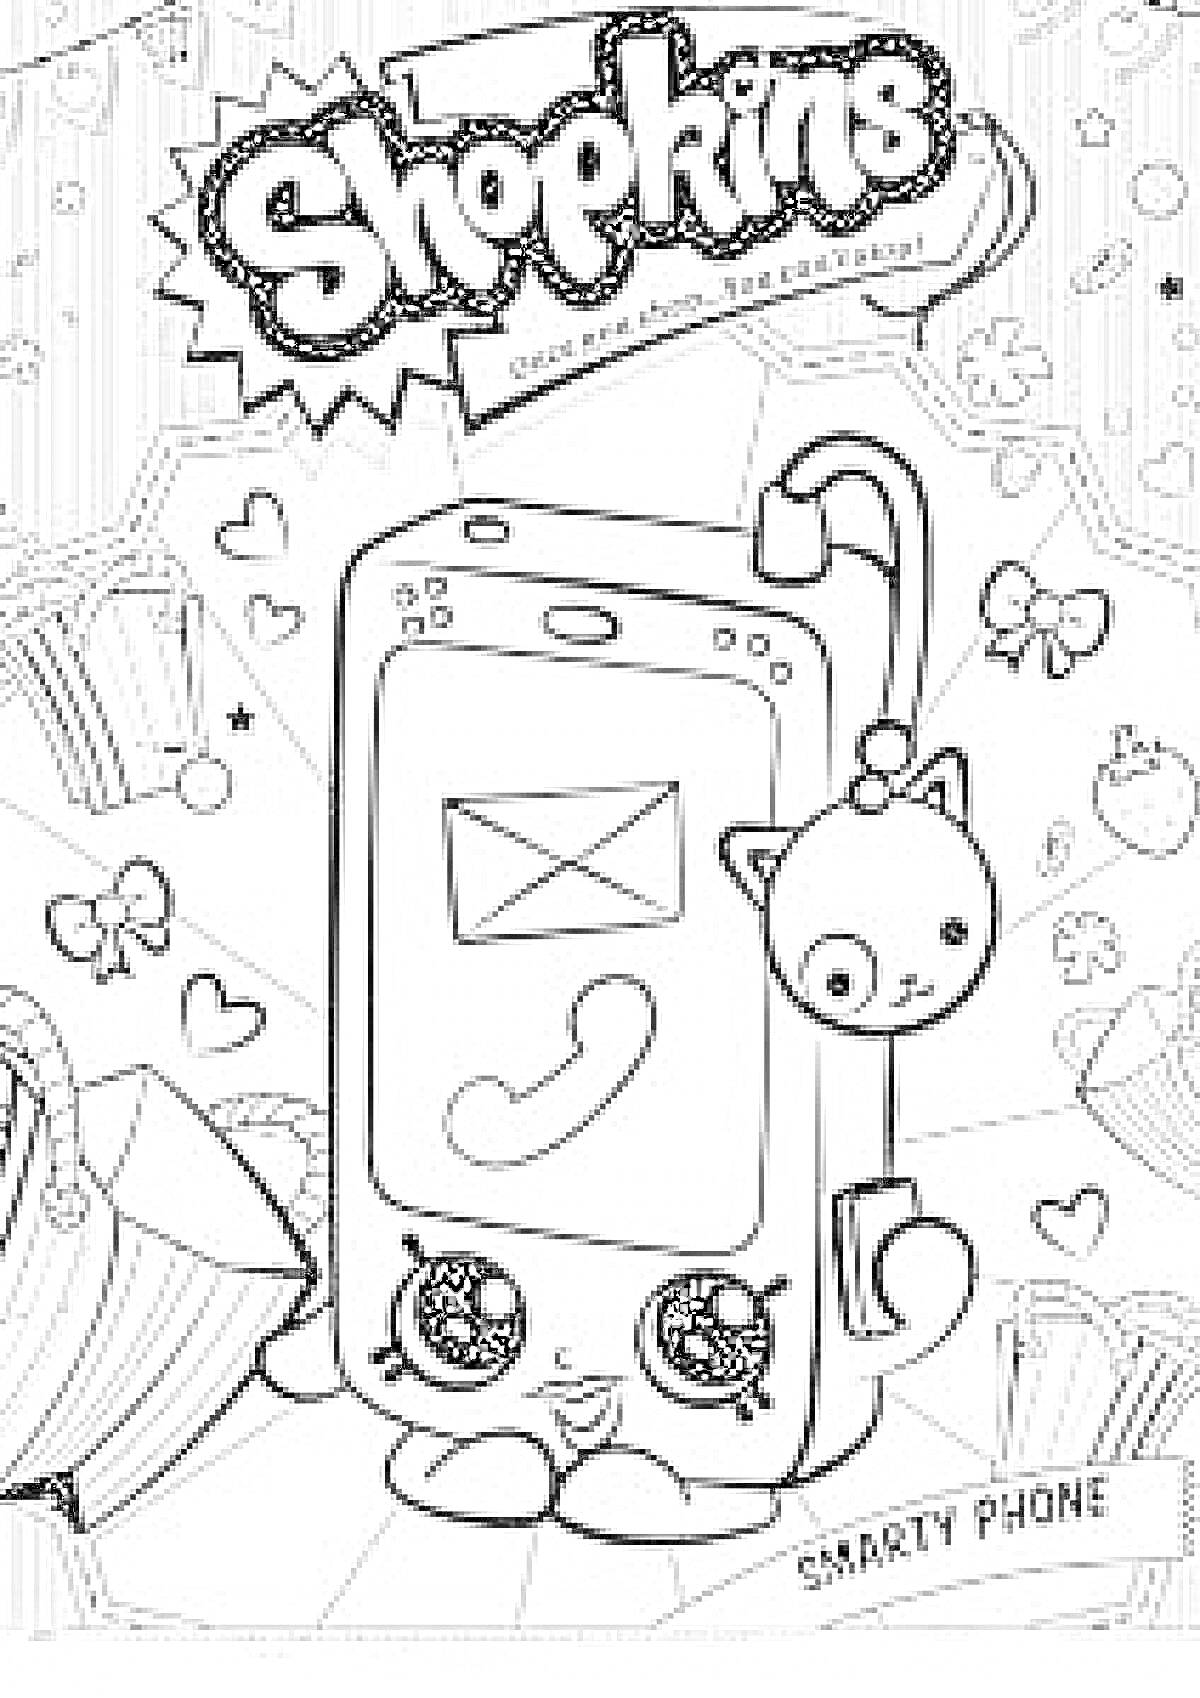 Шопкинс: телефон с котёнком, сумки, сердце, звёзды, бантики, цветы